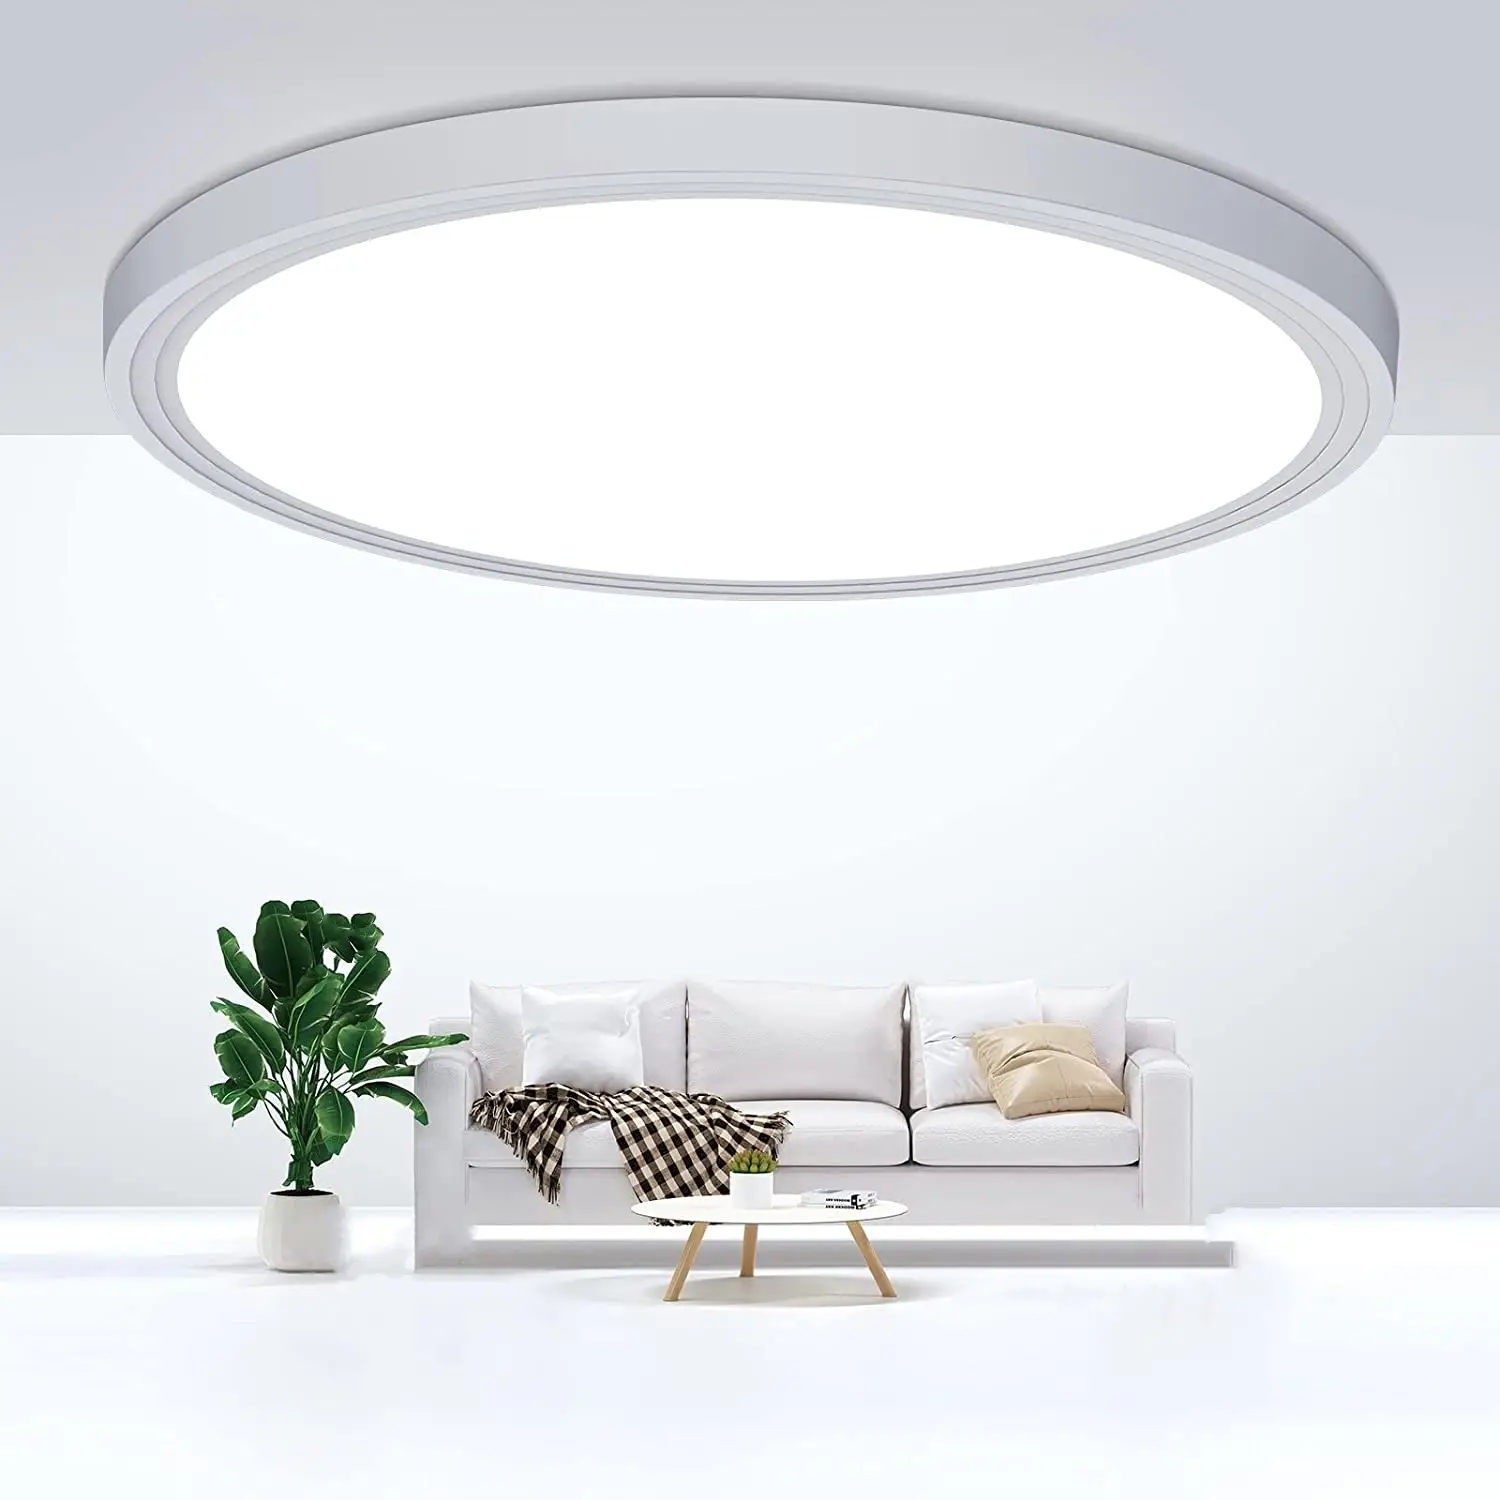 Flush Mount Ceiling Light Fixtures Flat led Light for Ceiling 6000K 2200LM Ultra Thin Round White Lamp for Bedroom Kitchen